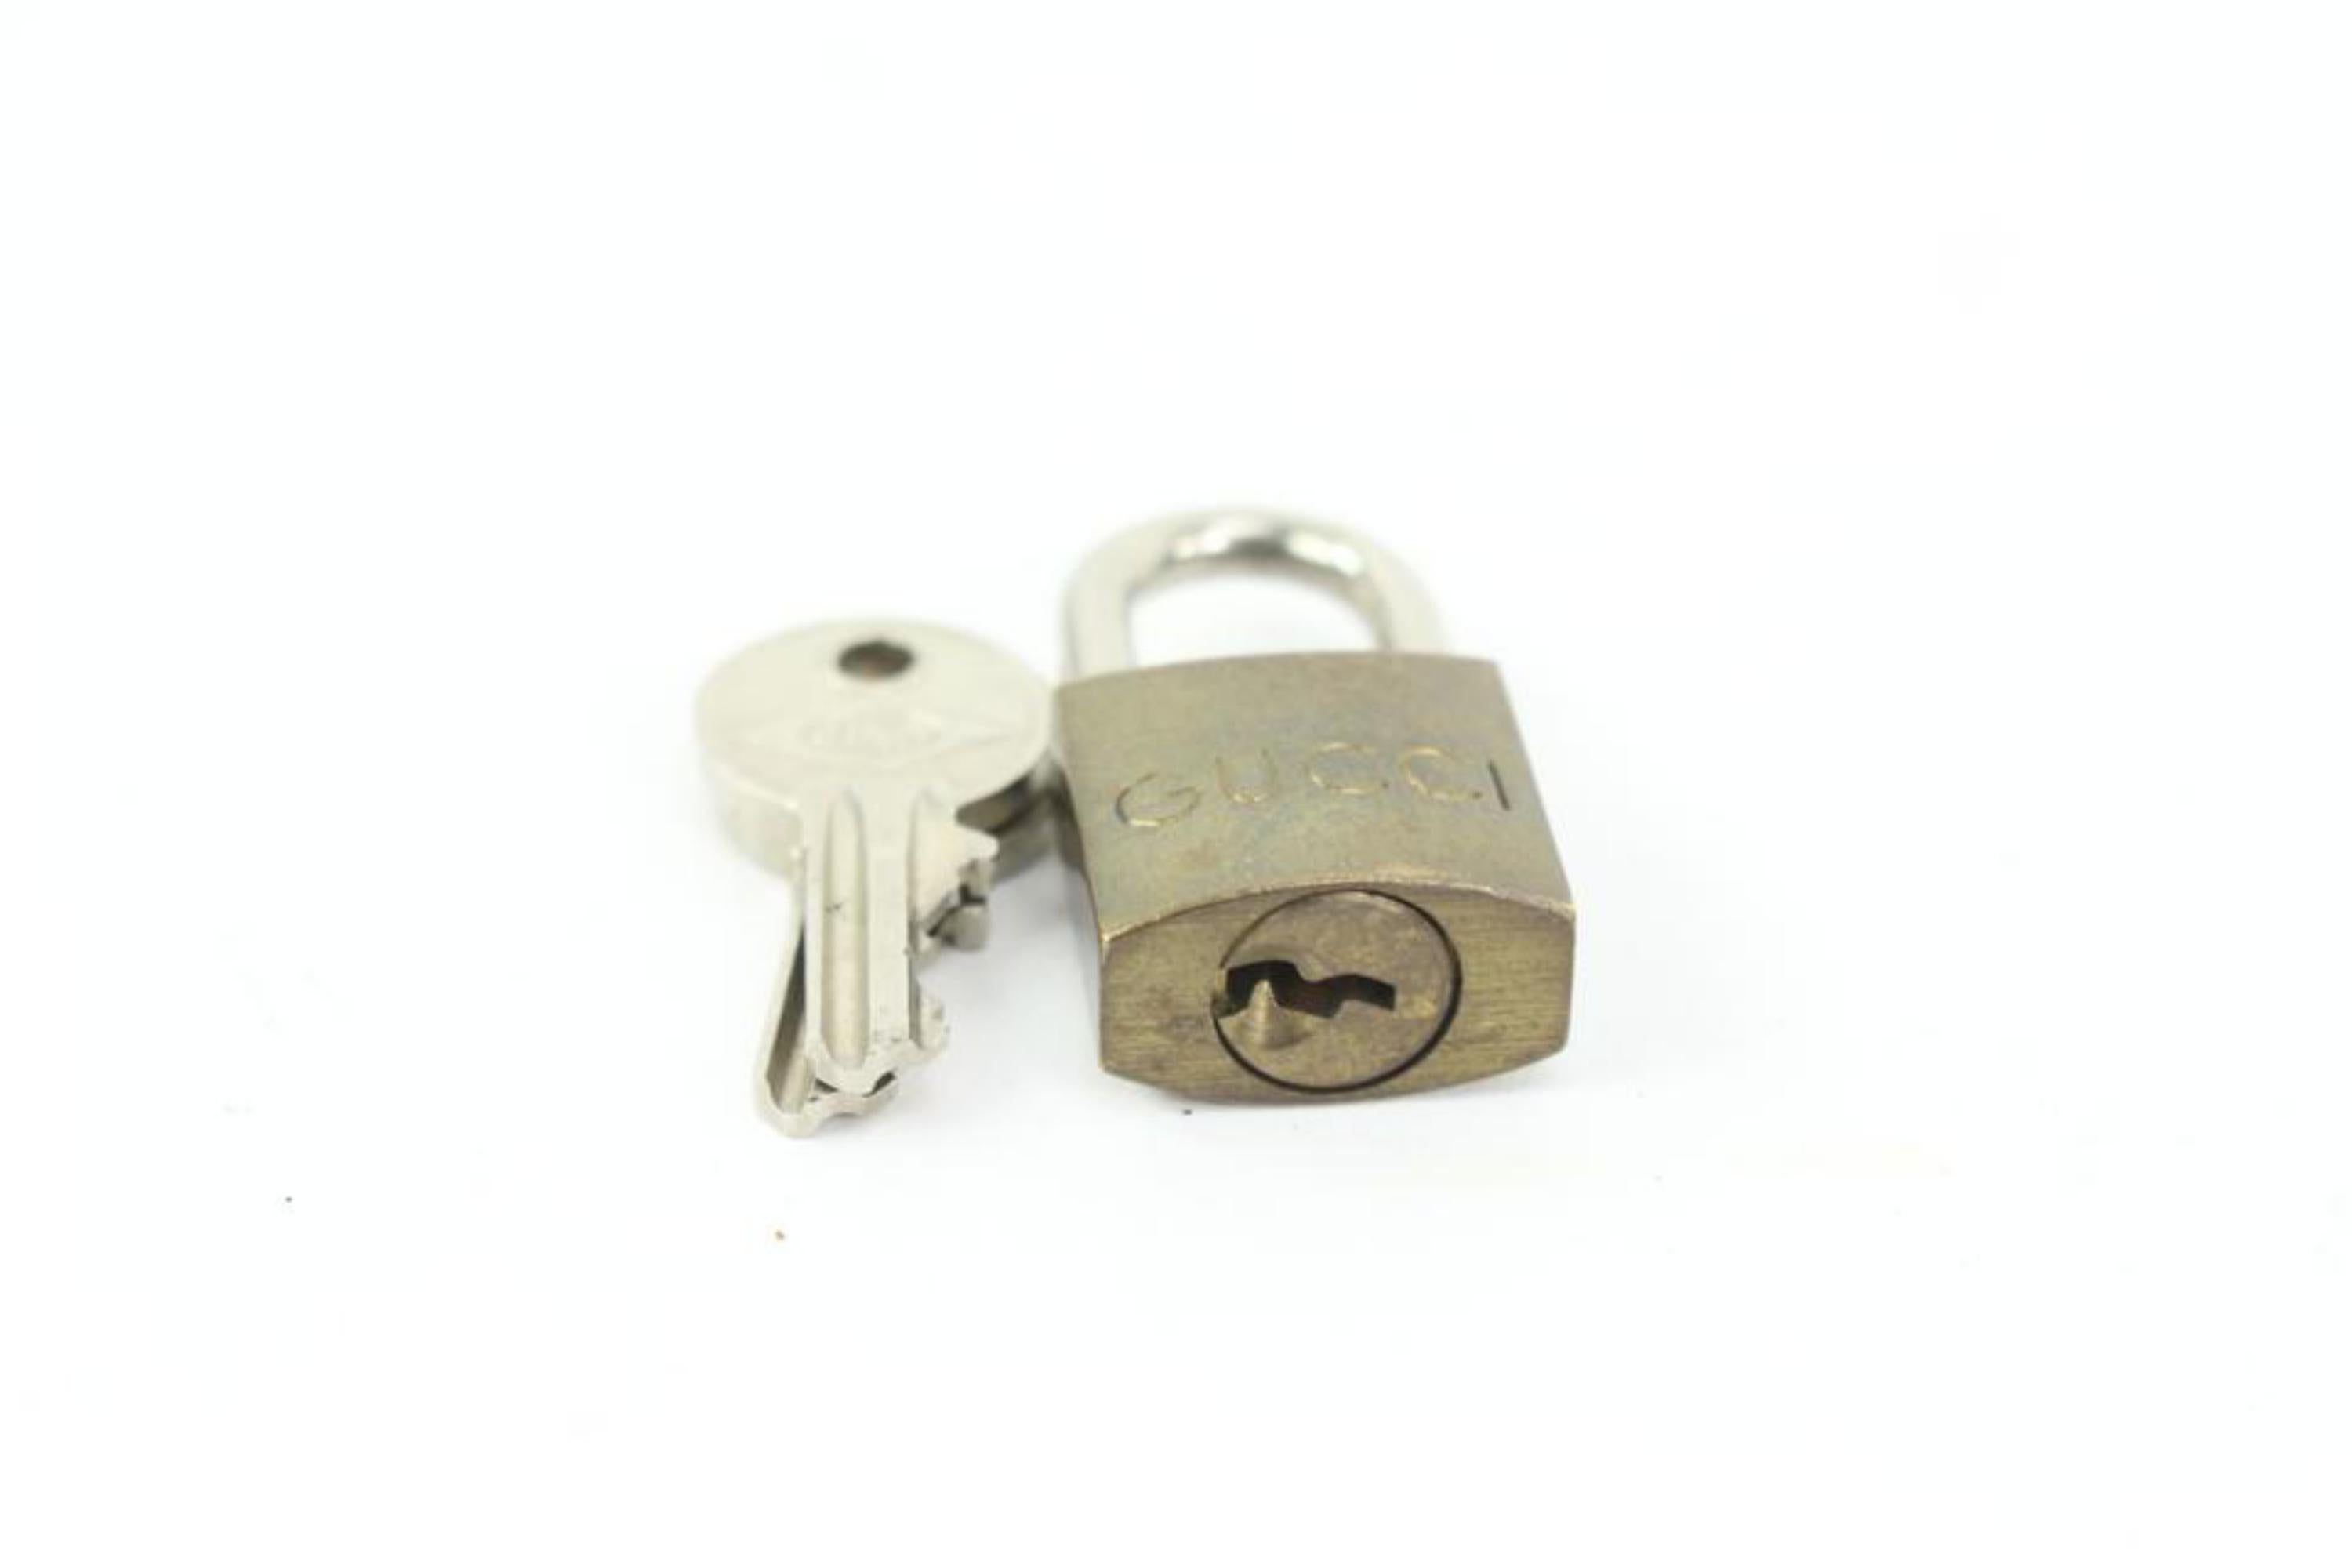 Brown Gucci Brace G Logo Lock and Key Set Cadena Bag Charm Padlock 69g315s